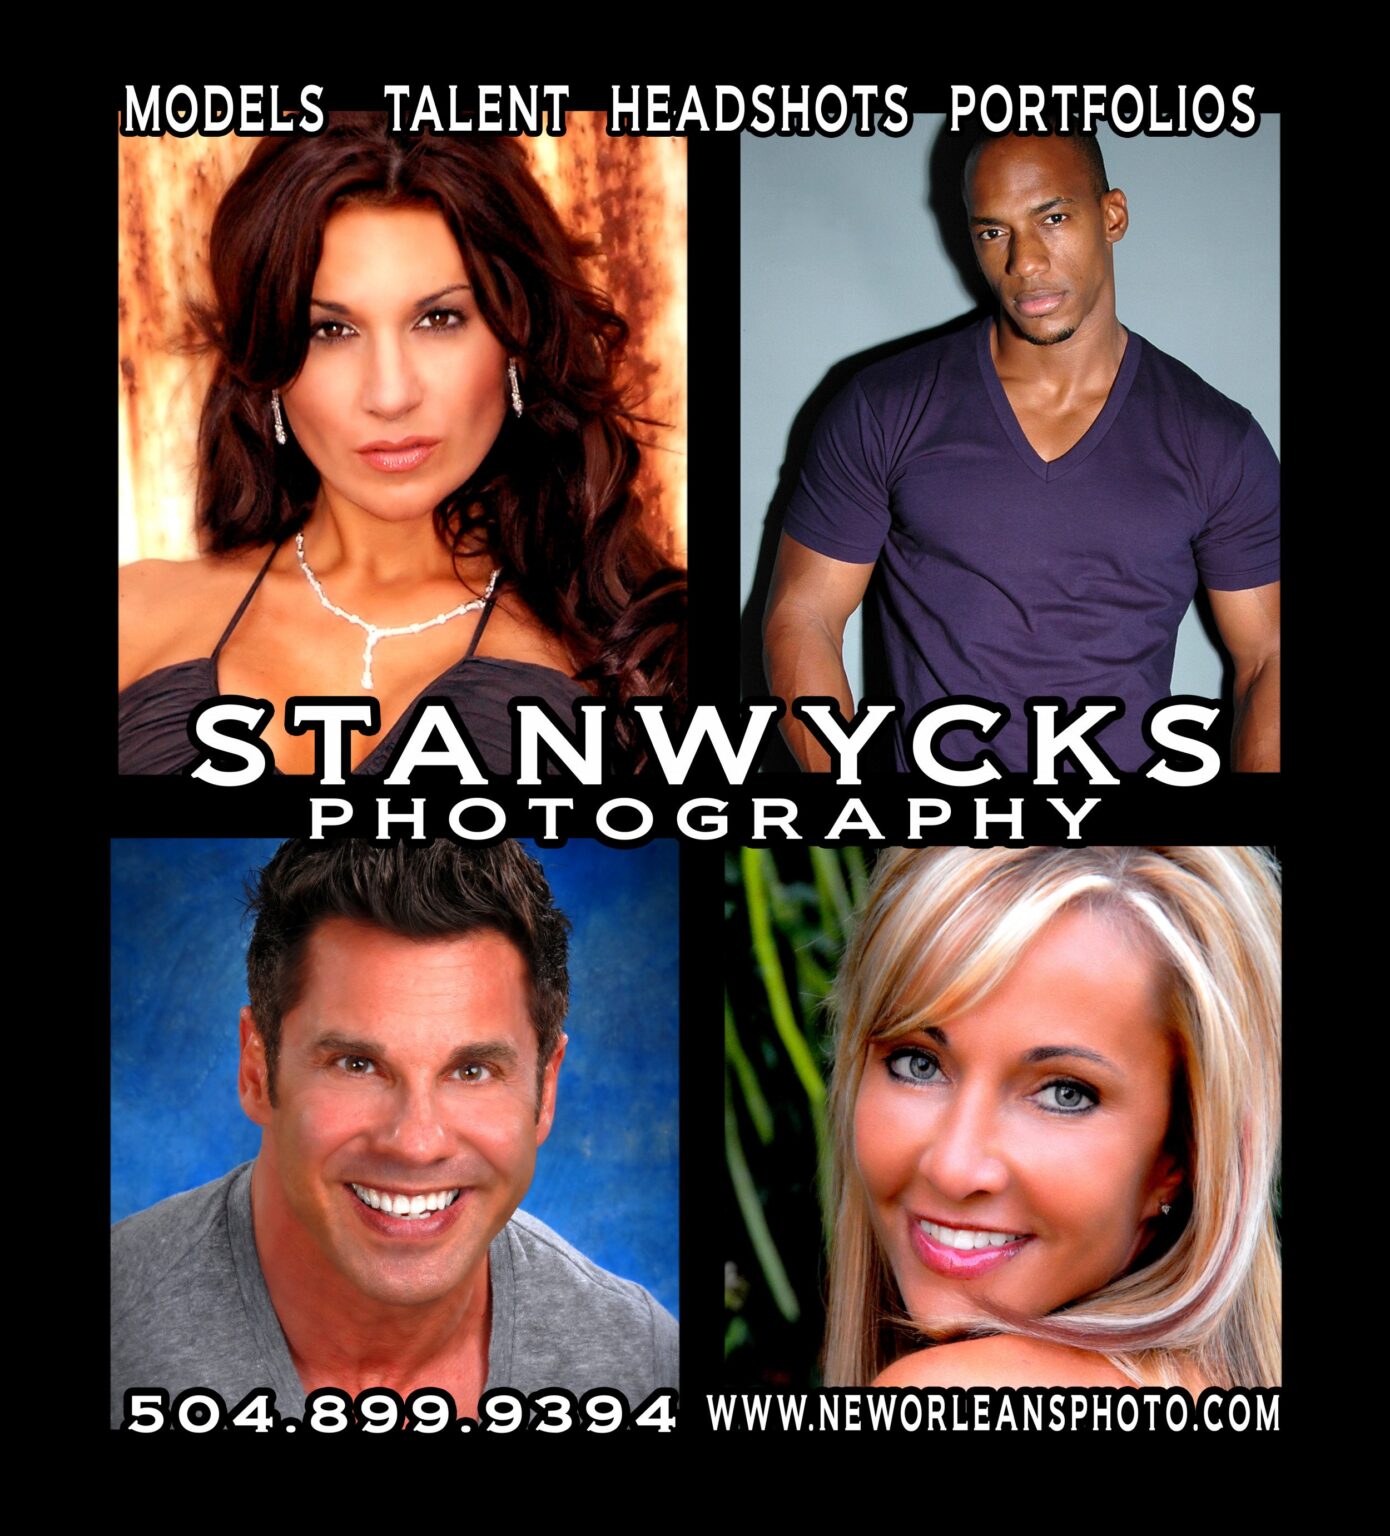 Stanwycks Photography - Headshots, Portfolios, Models and Talent